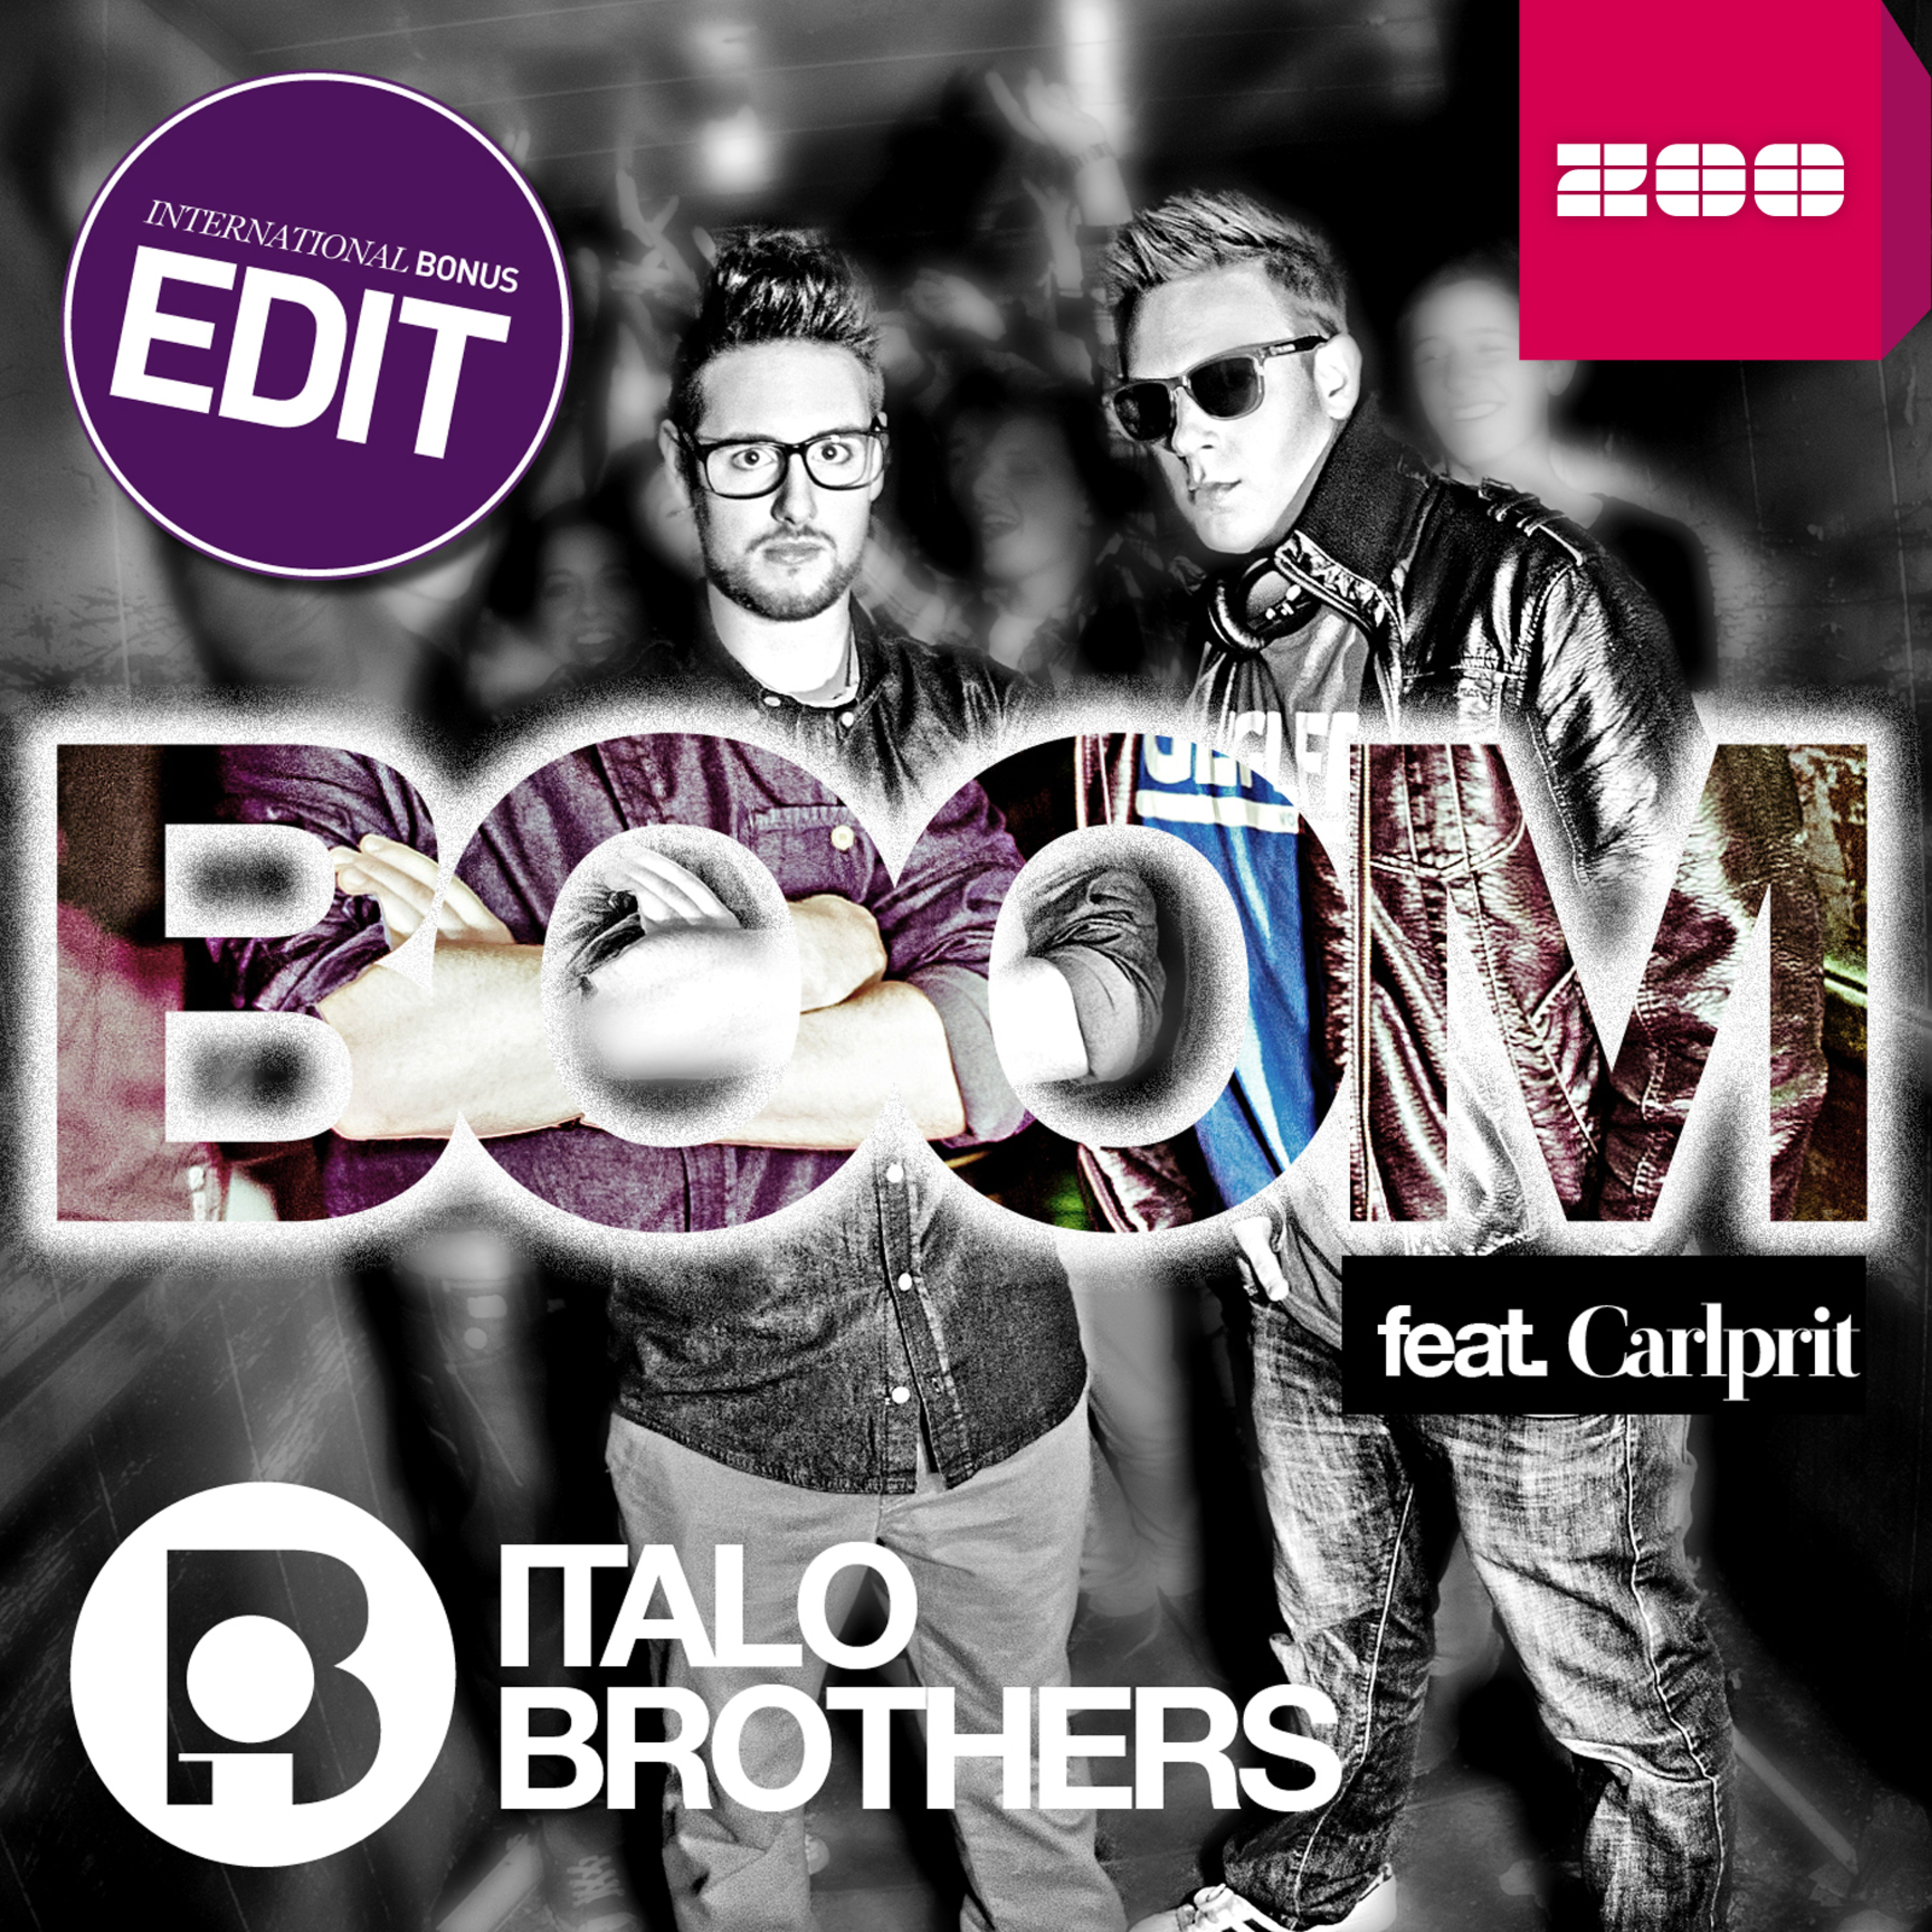 Boom (Danish Bonus Extended Mix by Ado)